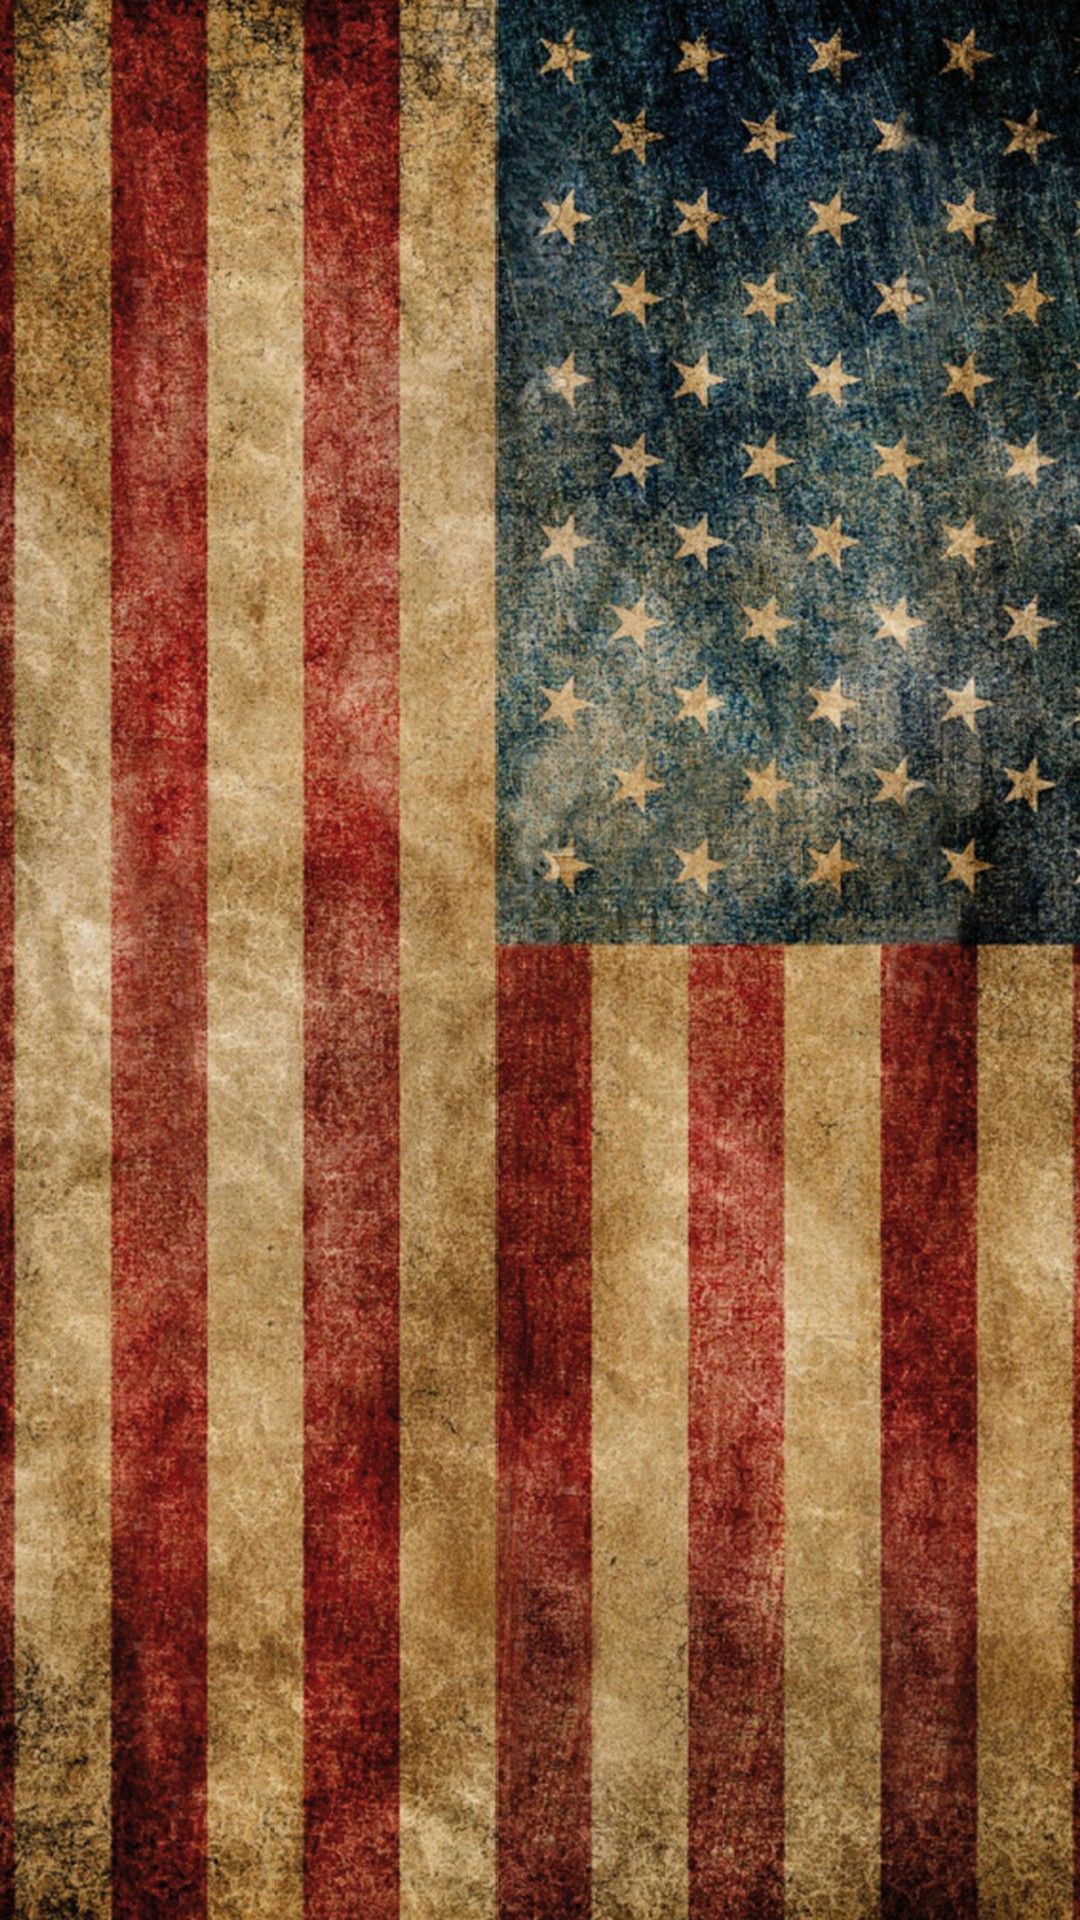 American Flag I Phones Wallpaper Is The Best High Resolution Phone Wallpaper In 2020.. American Flag Wallpaper, American Flag Wallpaper Iphone, American Wallpaper